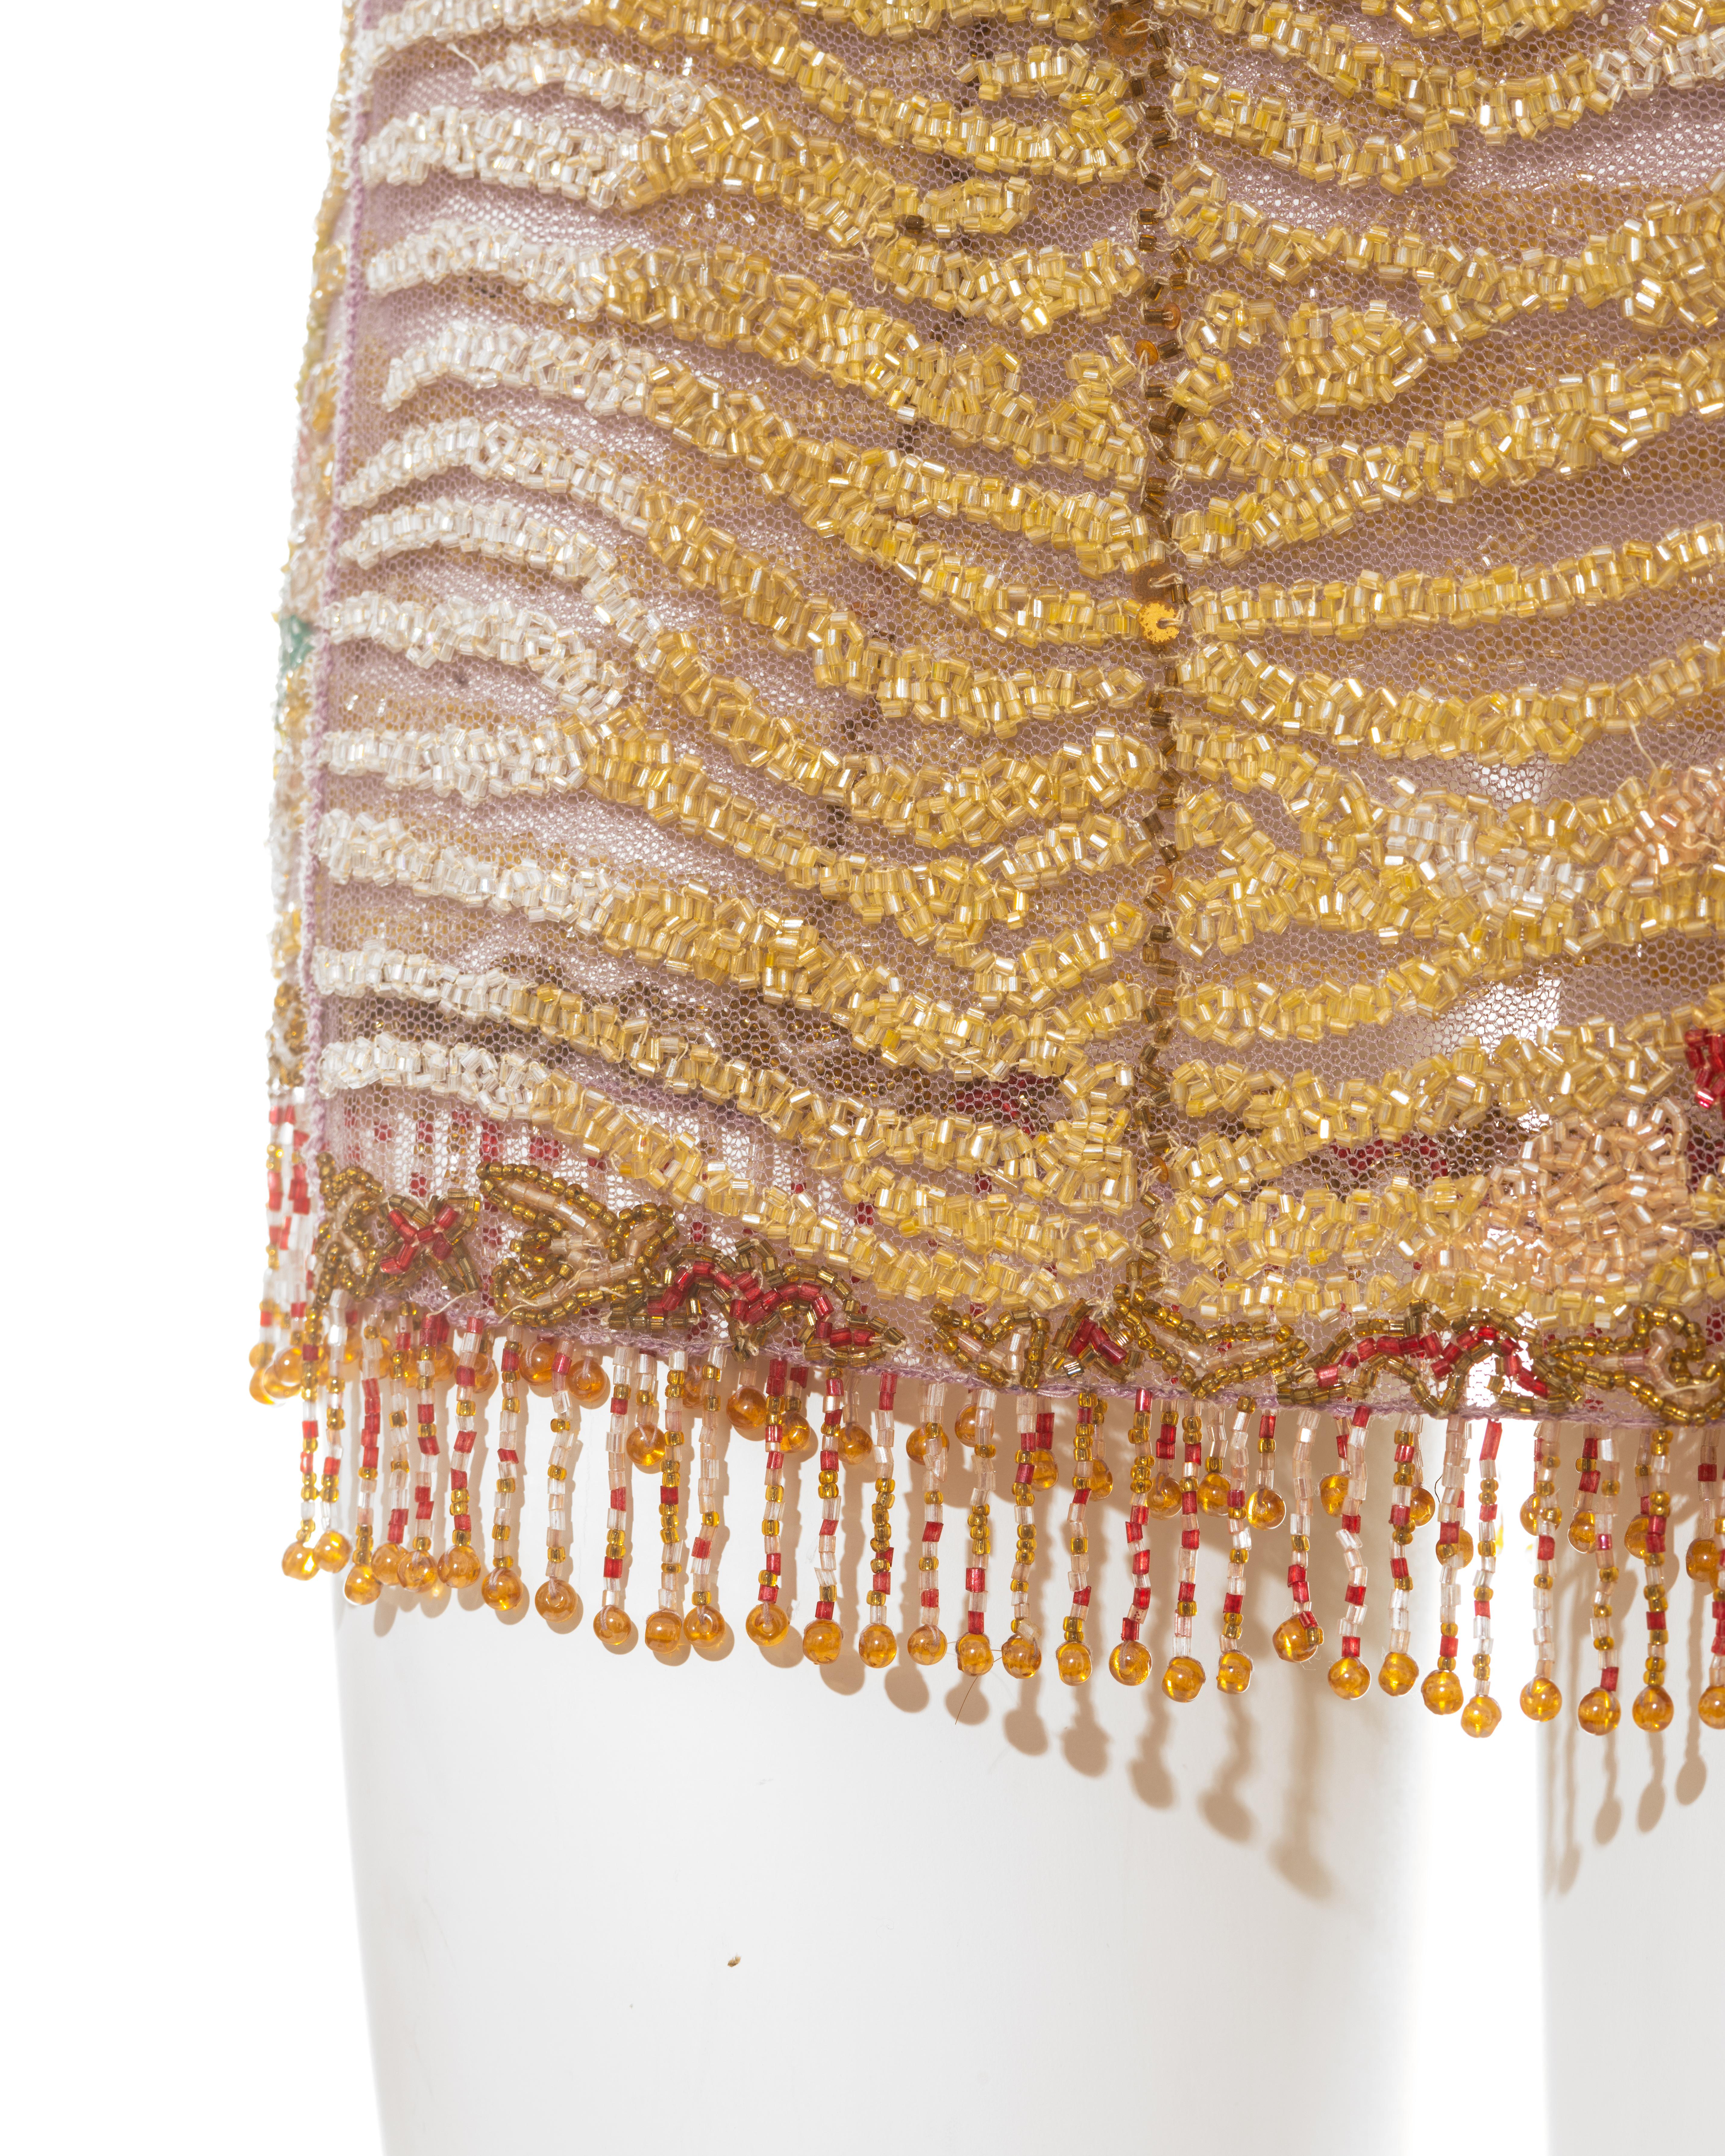 Brown Roberto Cavalli beaded embellished fringed evening wrap mini skirt, ss 2000